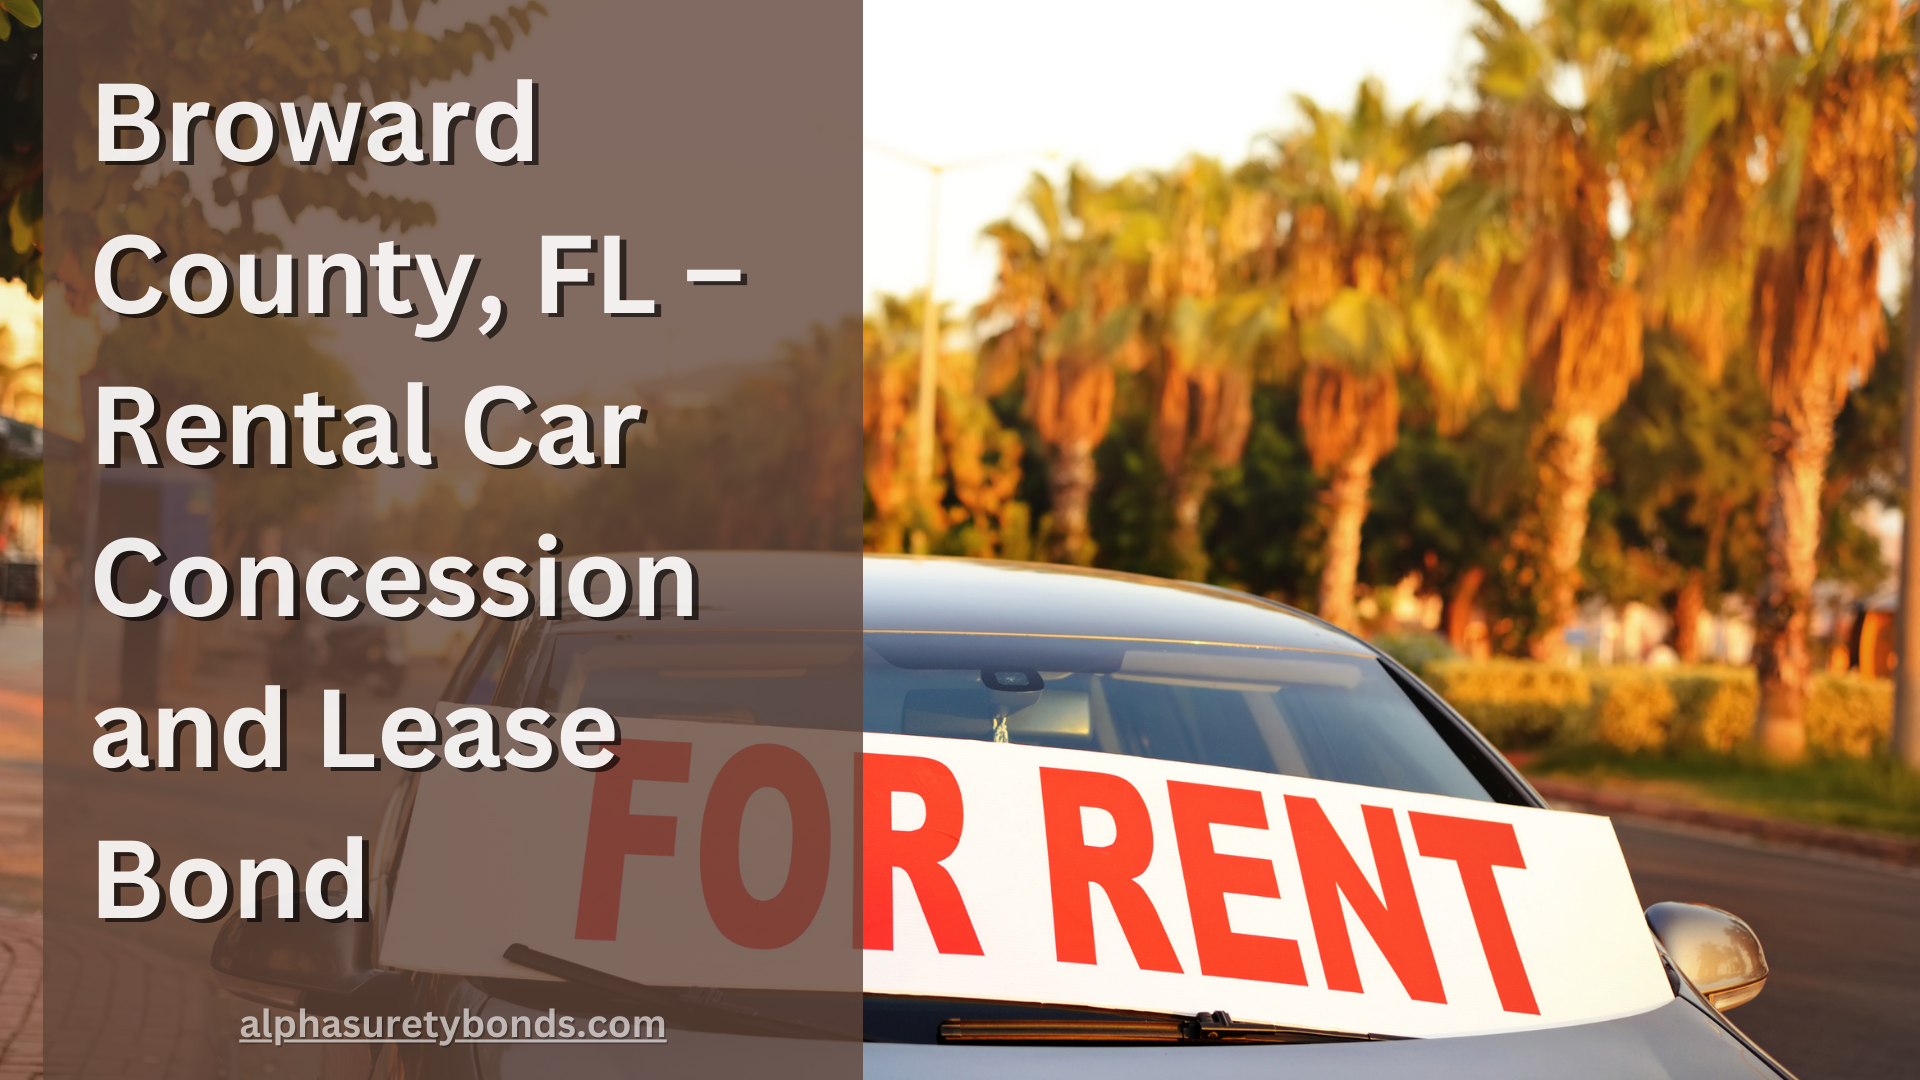 Broward County, FL – Rental Car Concession and Lease Bond